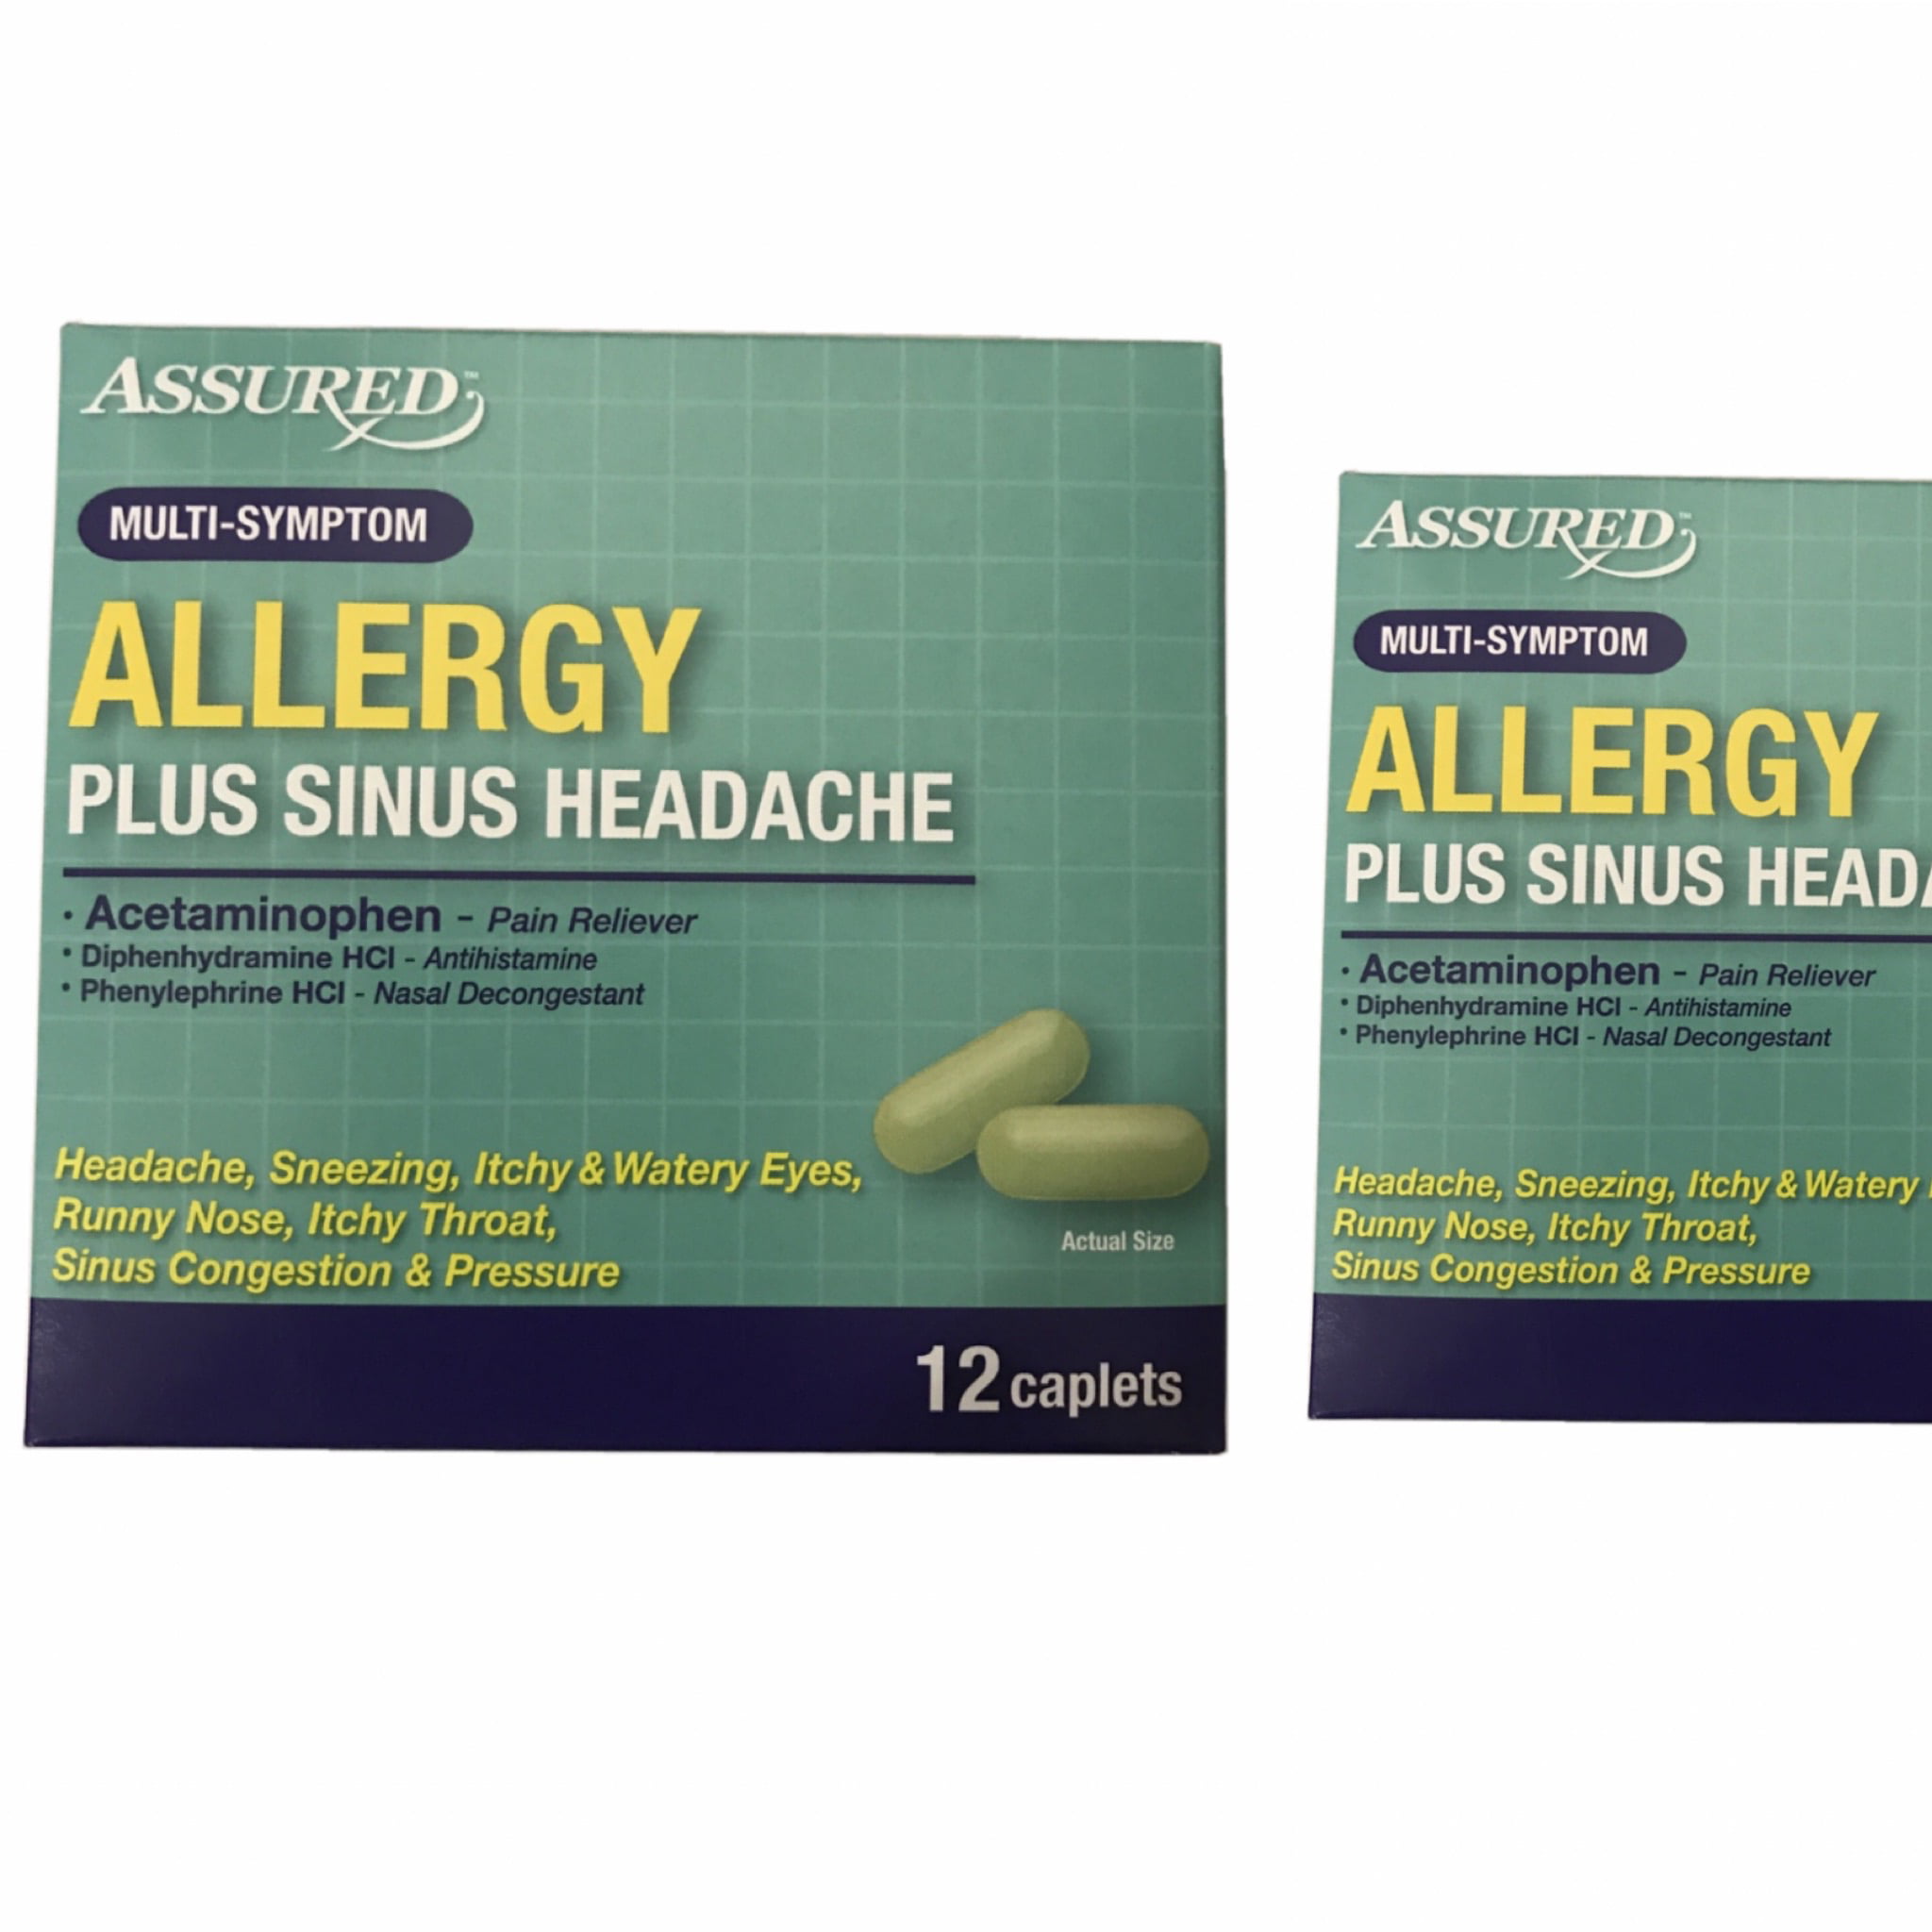 16 Assured allergy plus sinus headache review